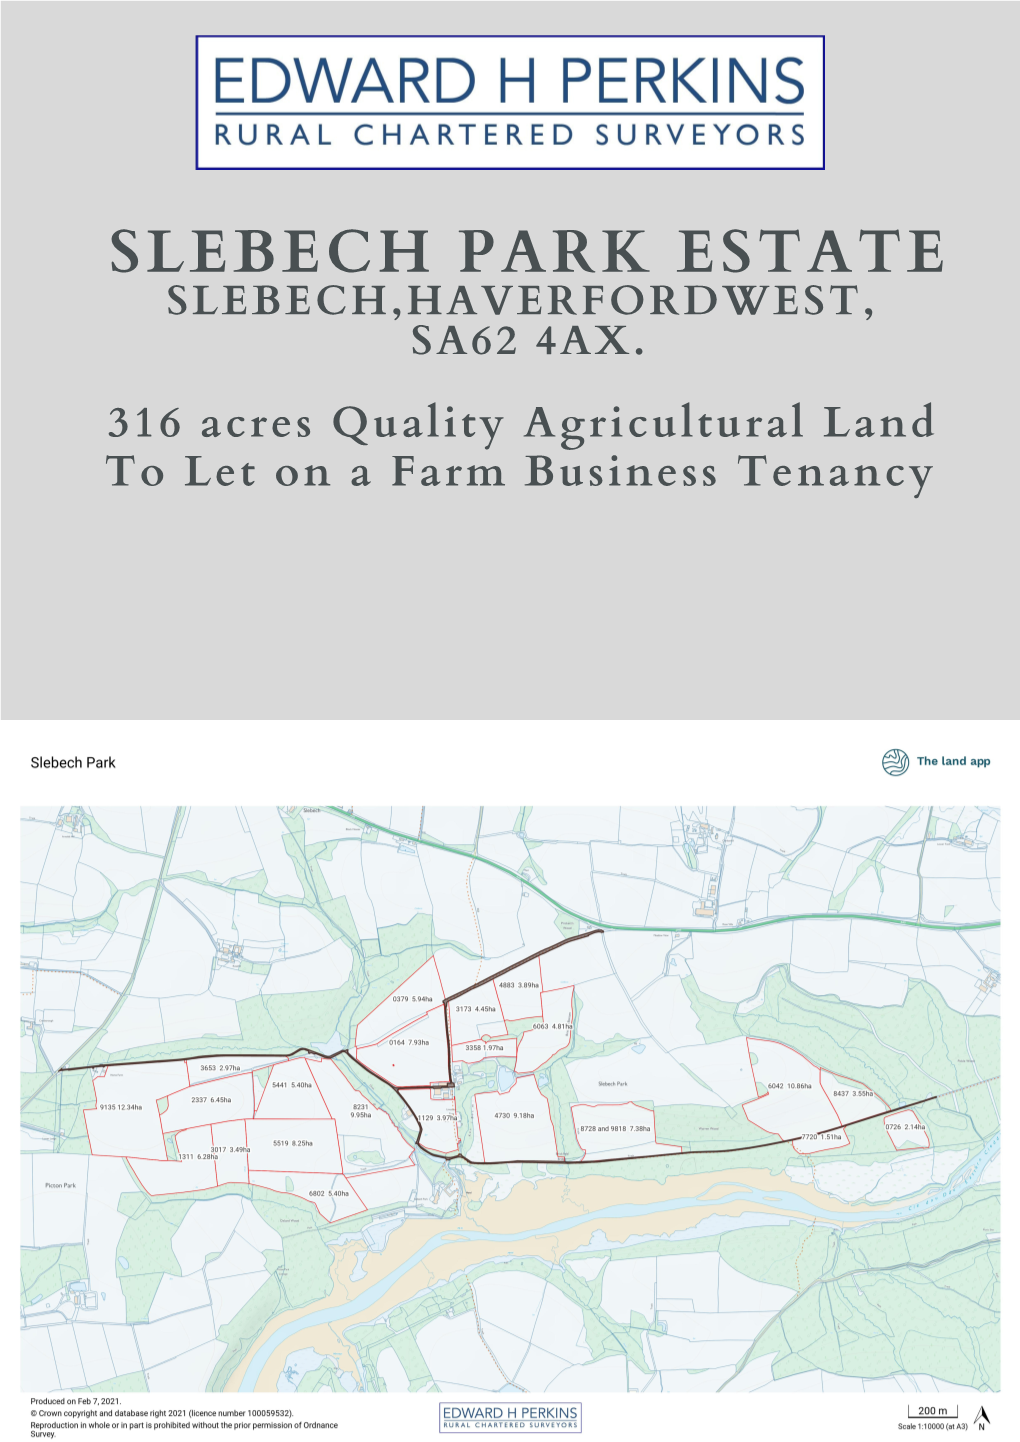 Slebech Park Estate Slebech,Haverfordwest, Sa62 4Ax